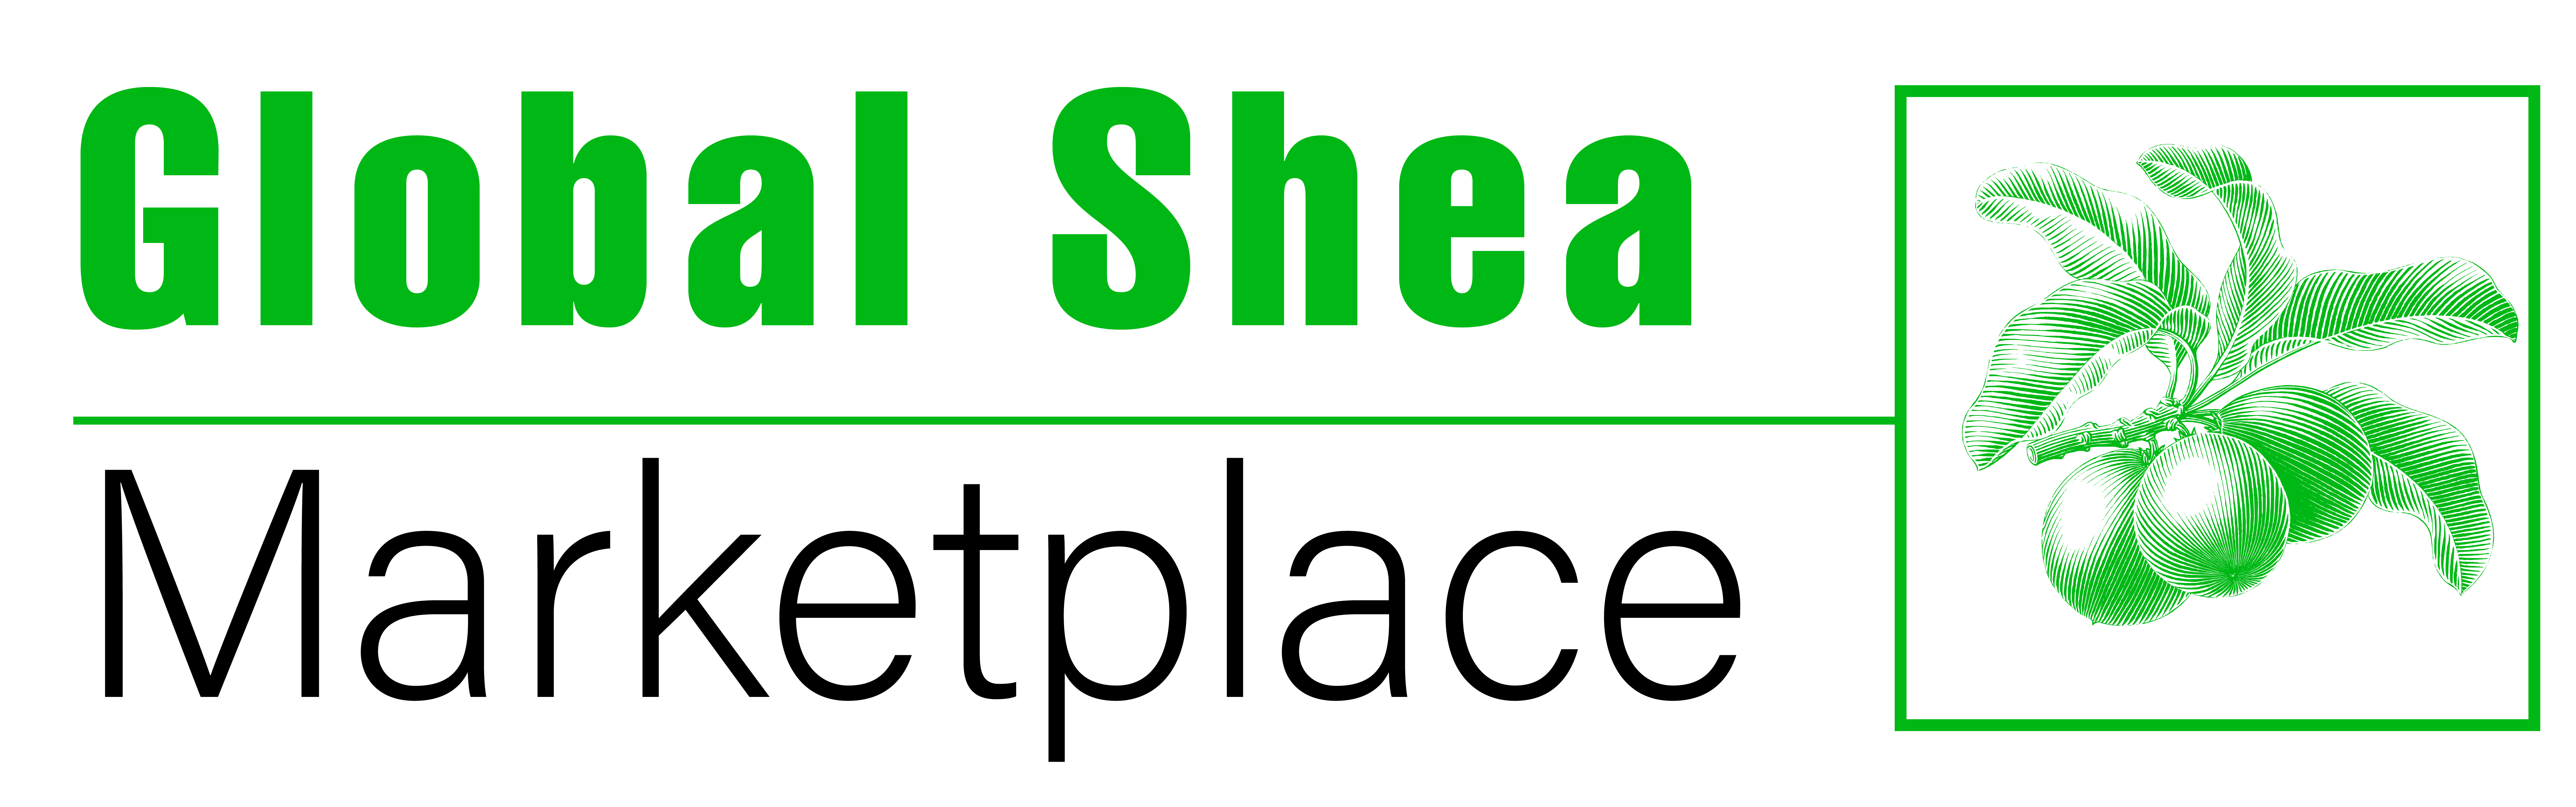 Global Shea Marketplace